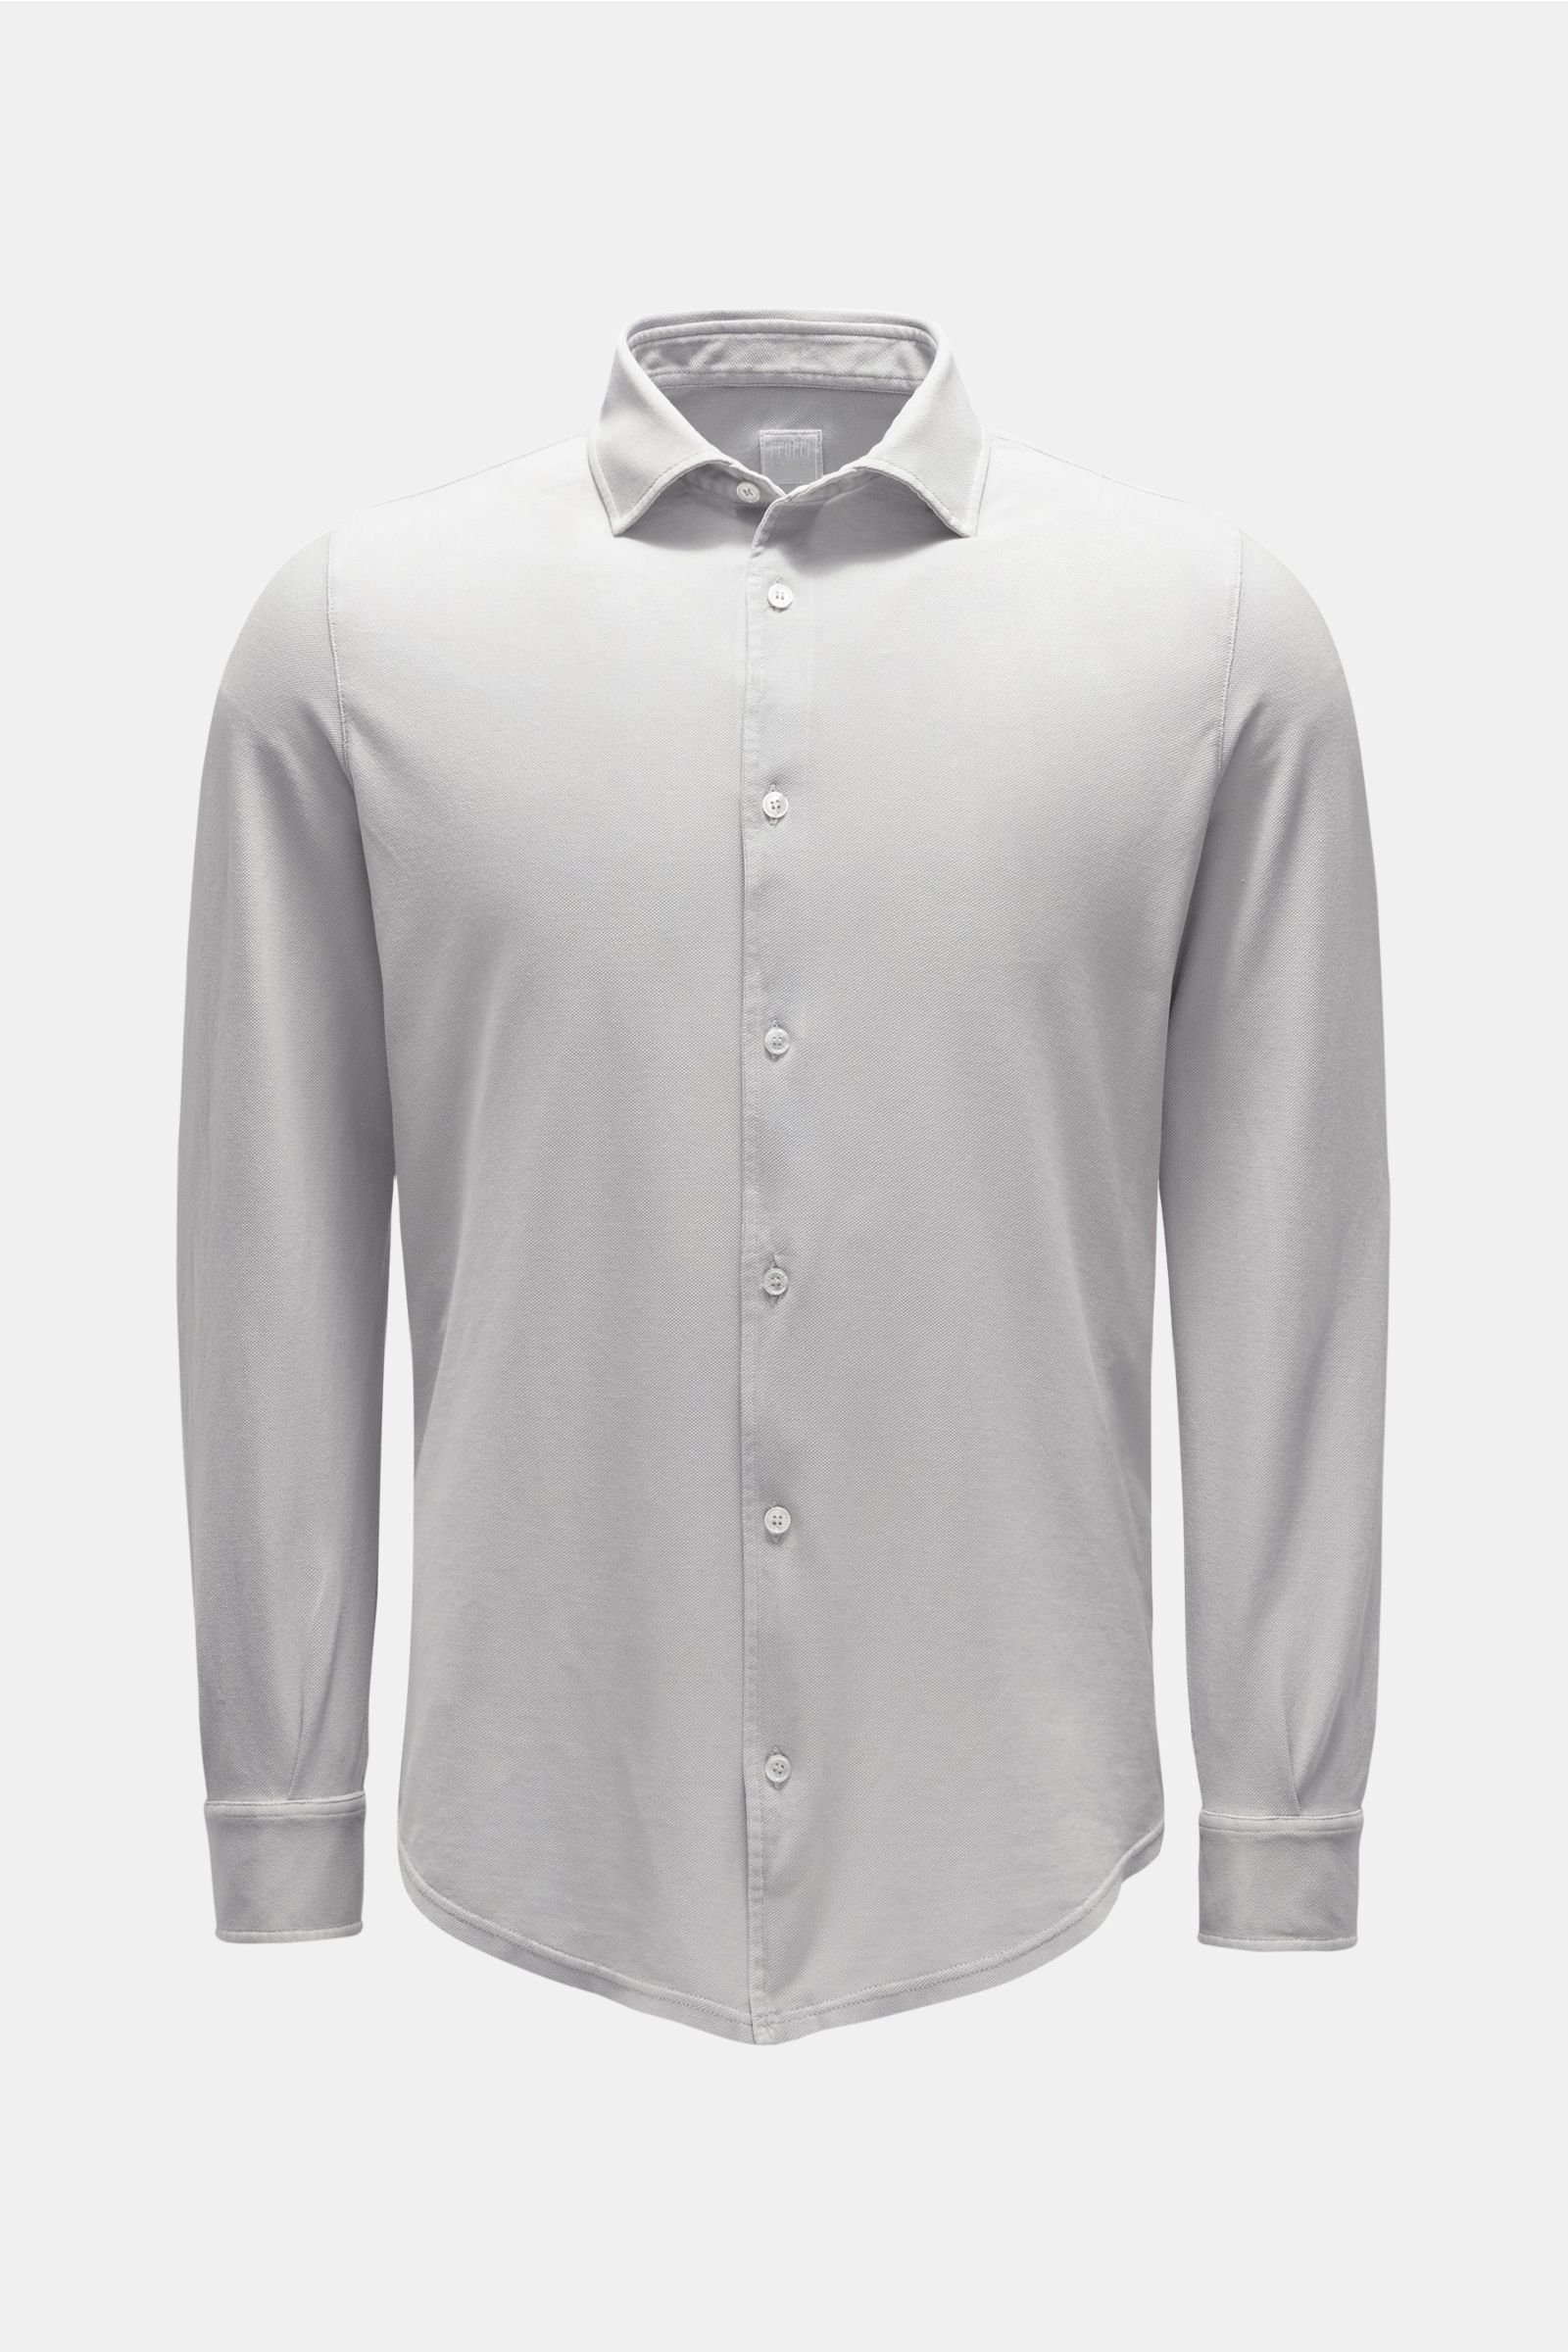 Piqué shirt 'Steve' slim collar light grey